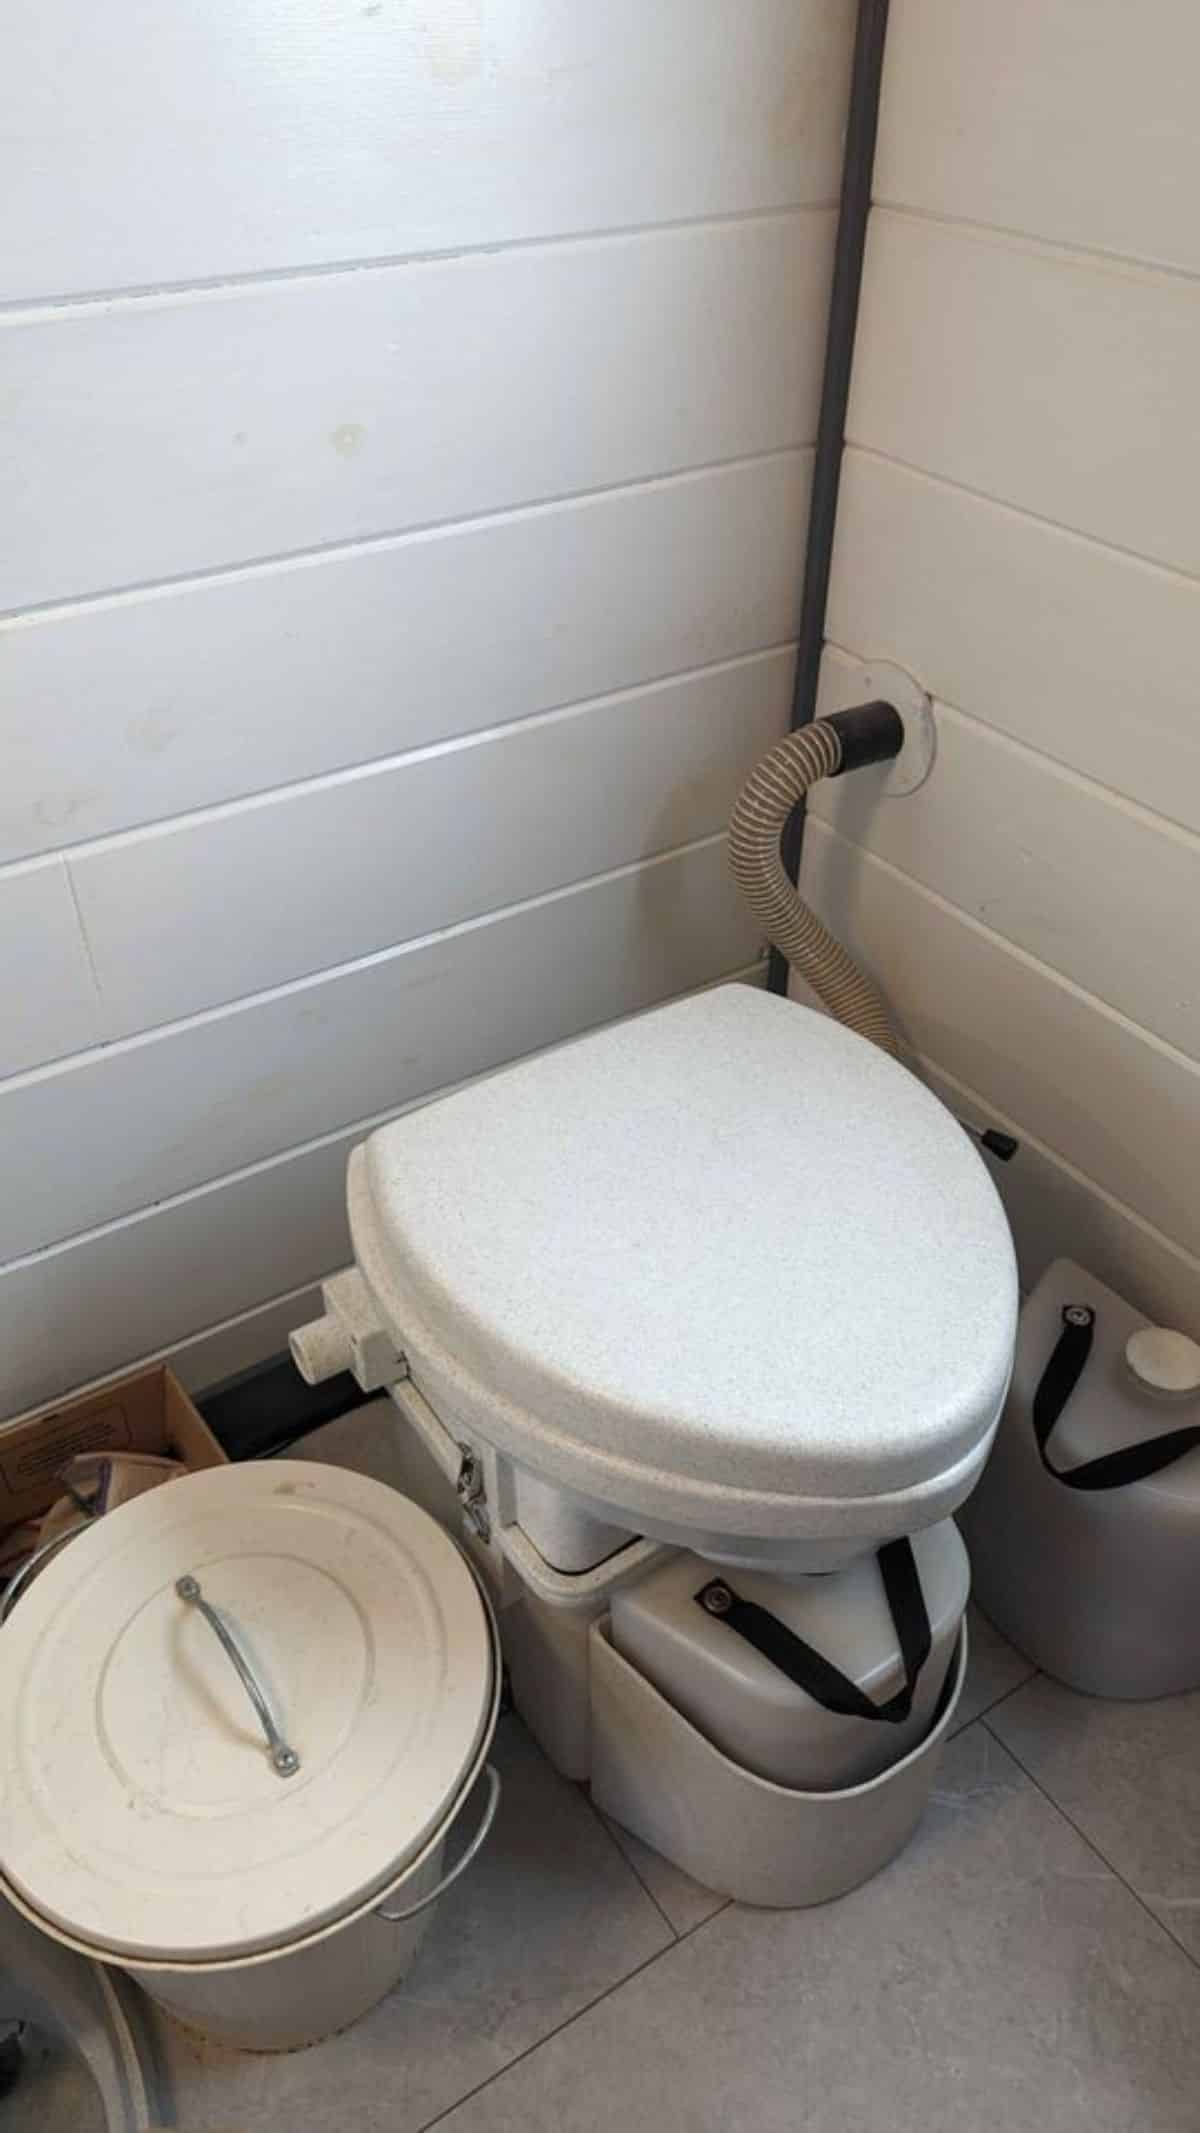 composting toilet installed in bathroom